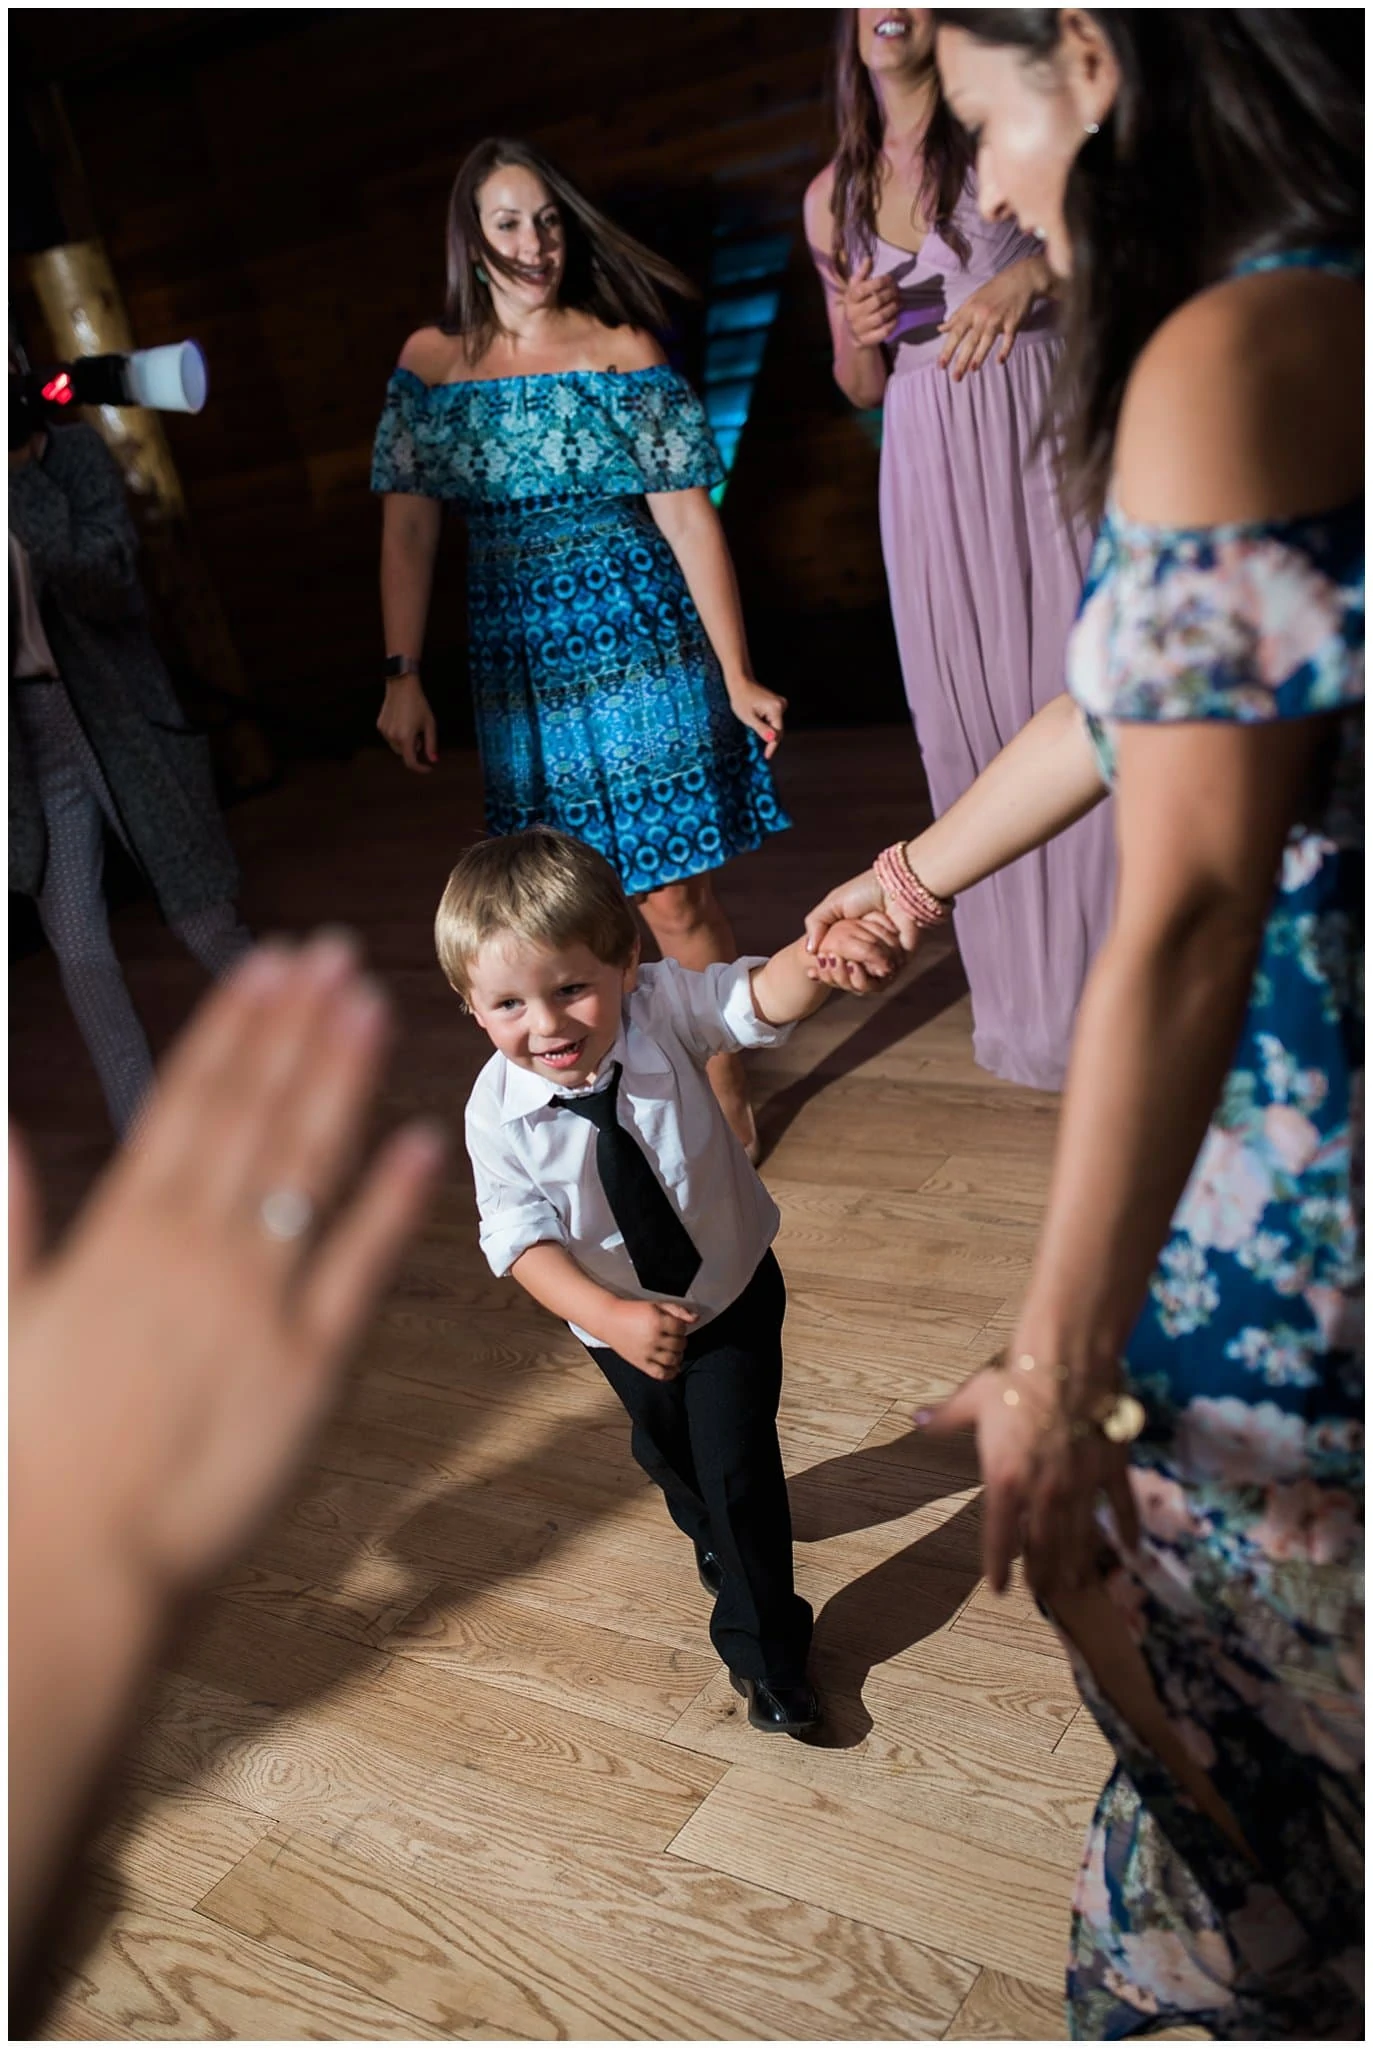 ring bearer dancing at wedding reception photo